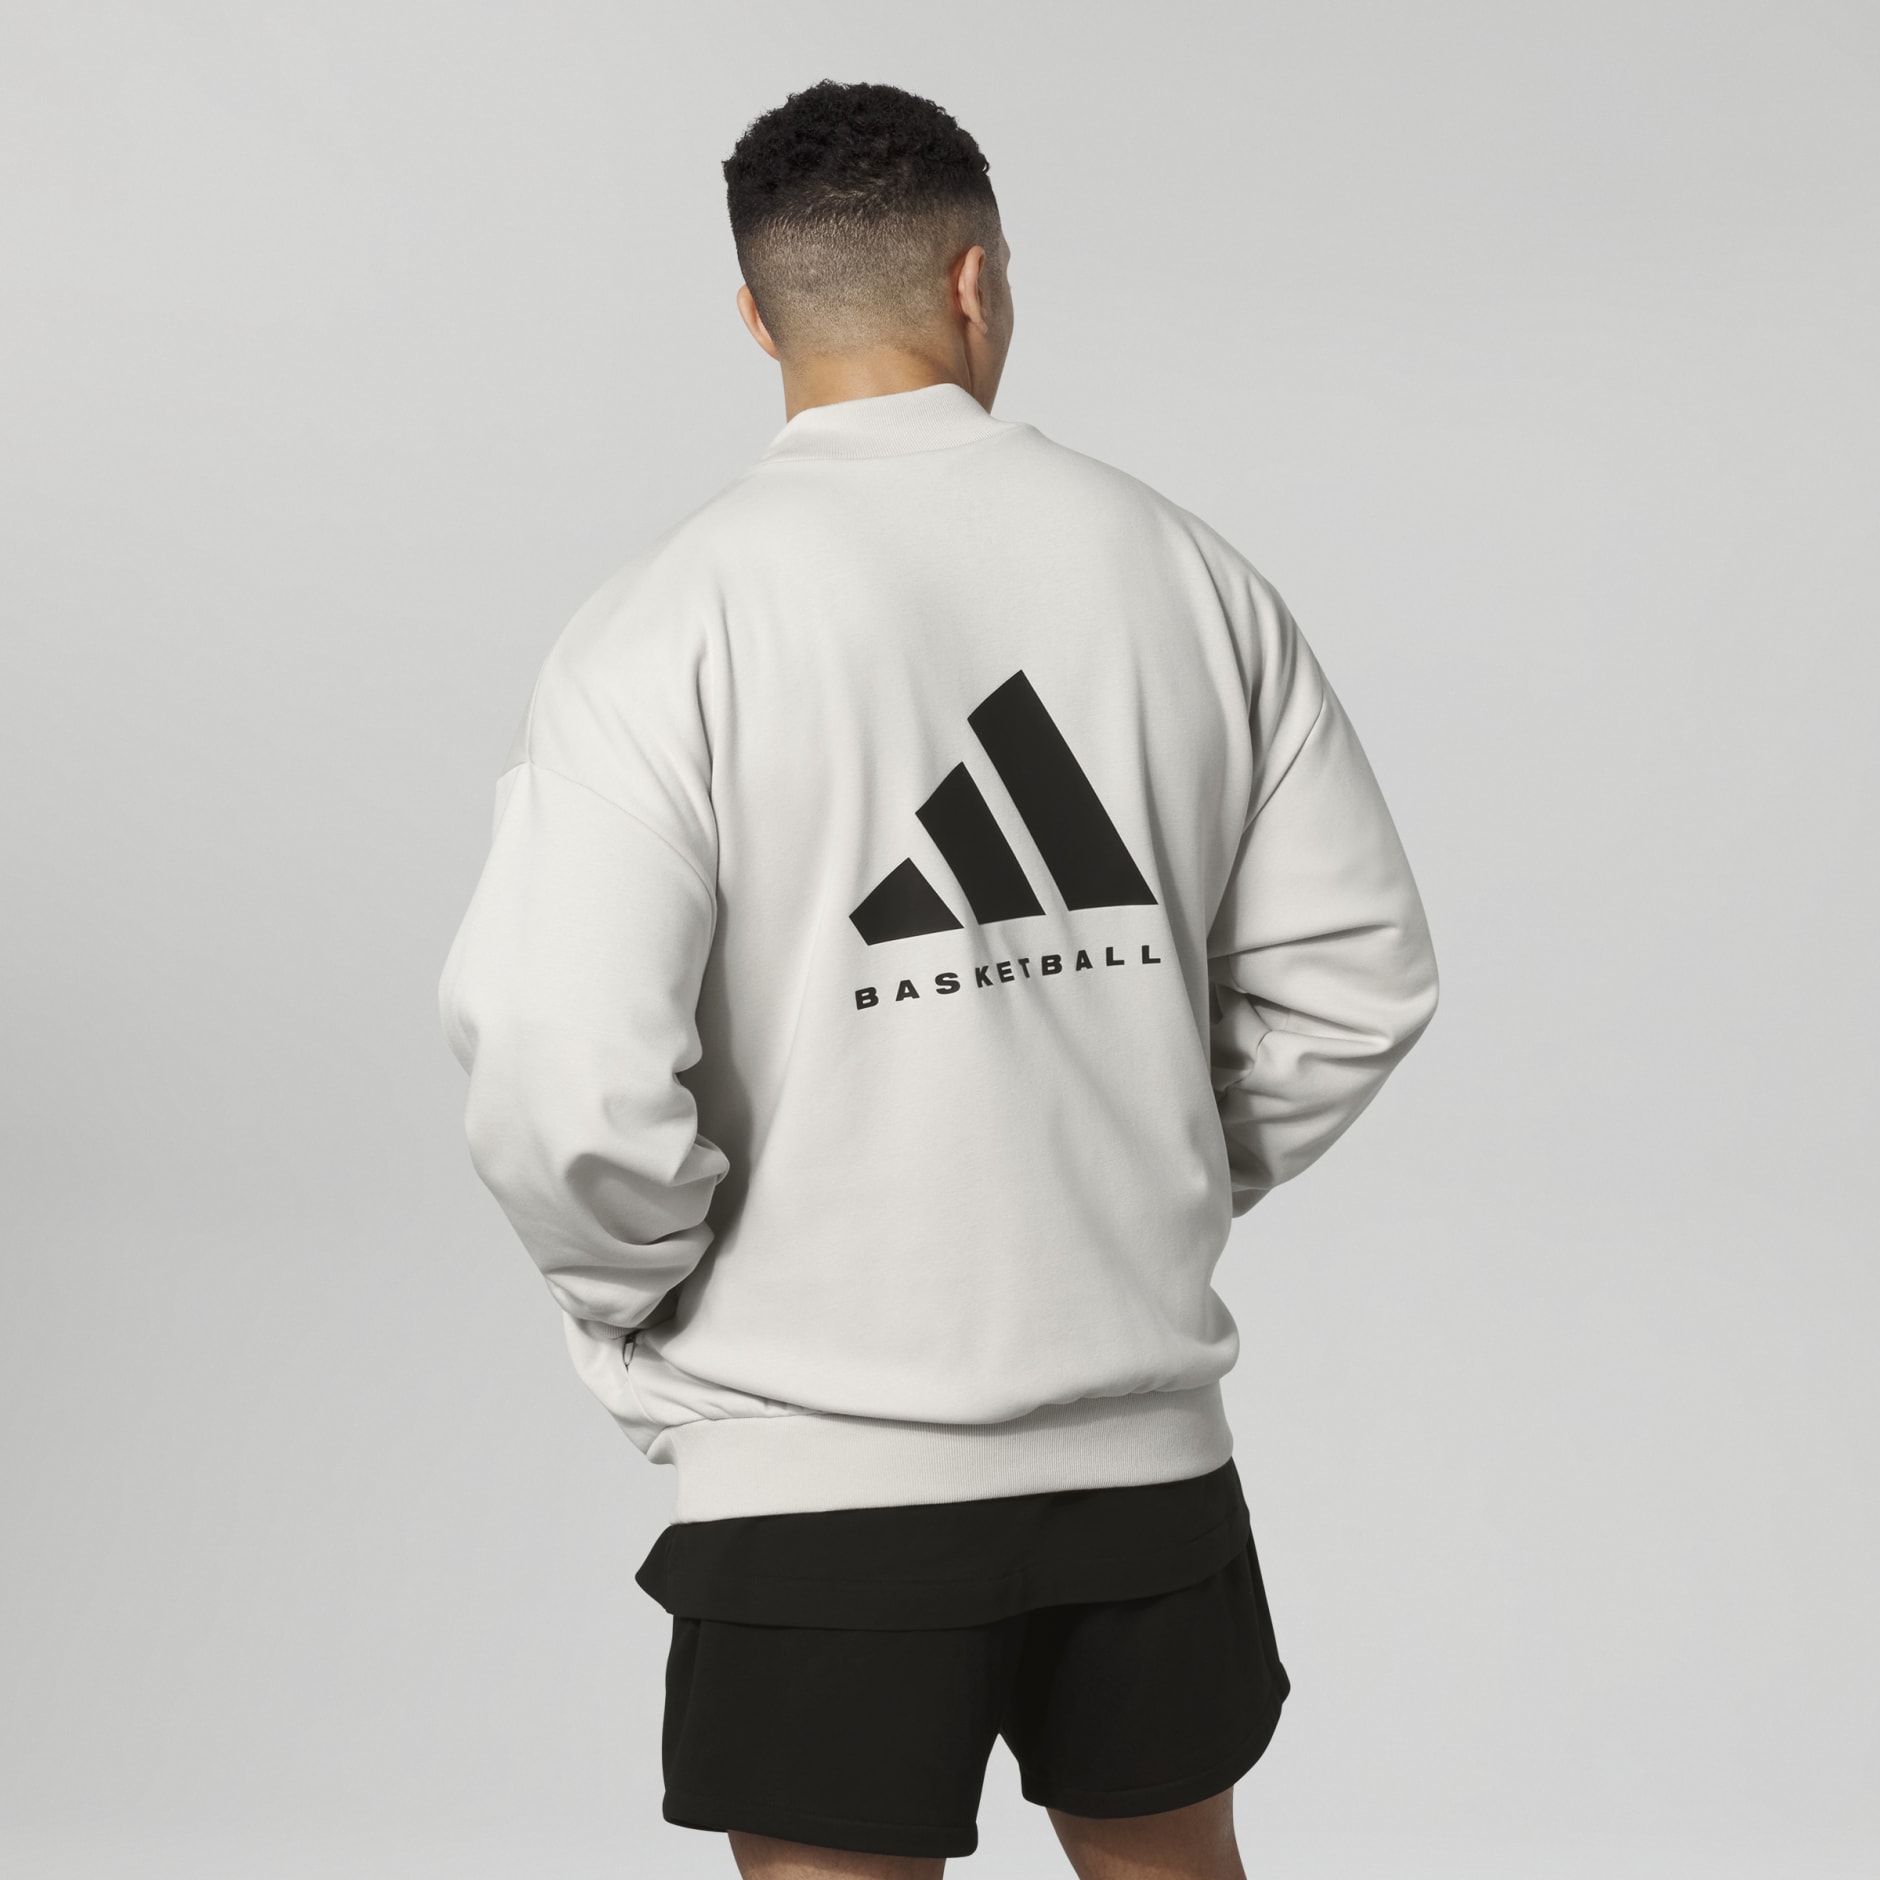 Clothing - adidas Basketball Crew Sweatshirt - Grey | adidas South Africa